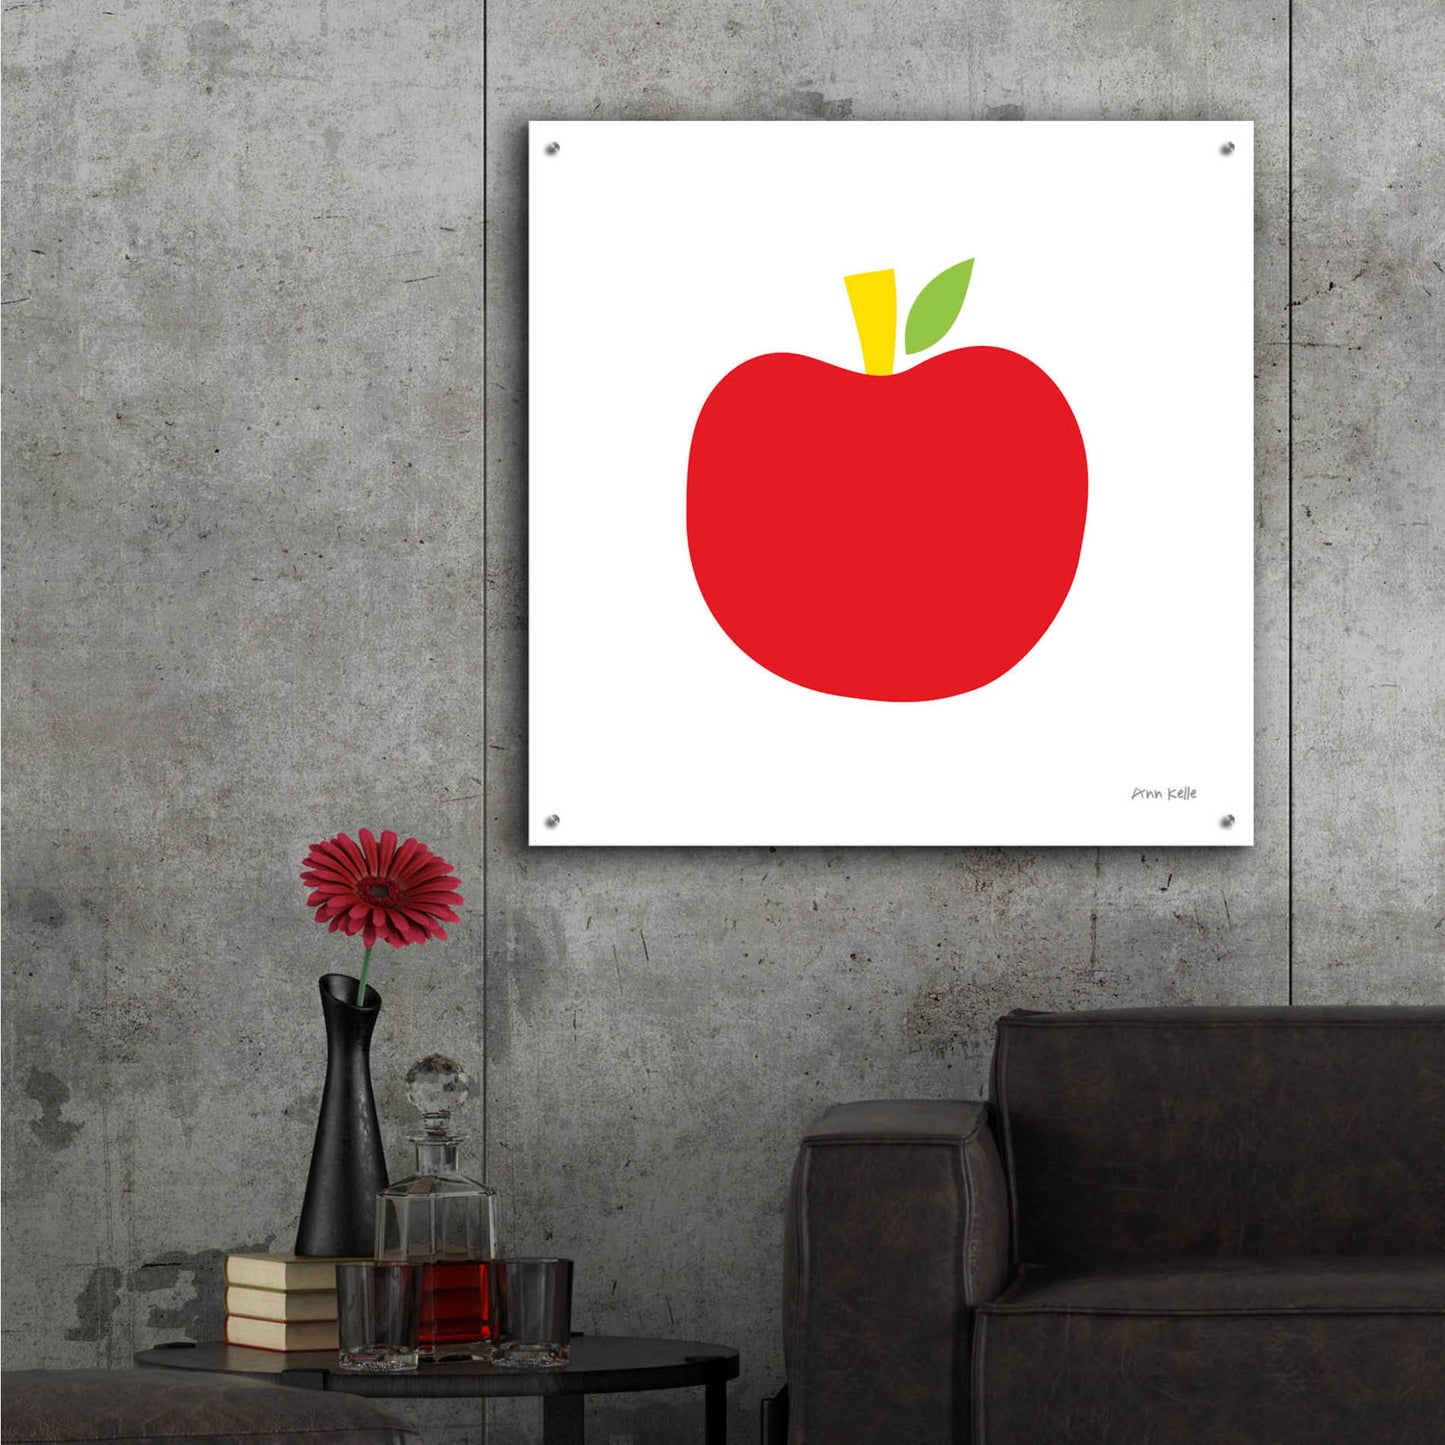 Epic Art 'Red Apple' by Ann Kelle Designs, Acrylic Glass Wall Art,36x36